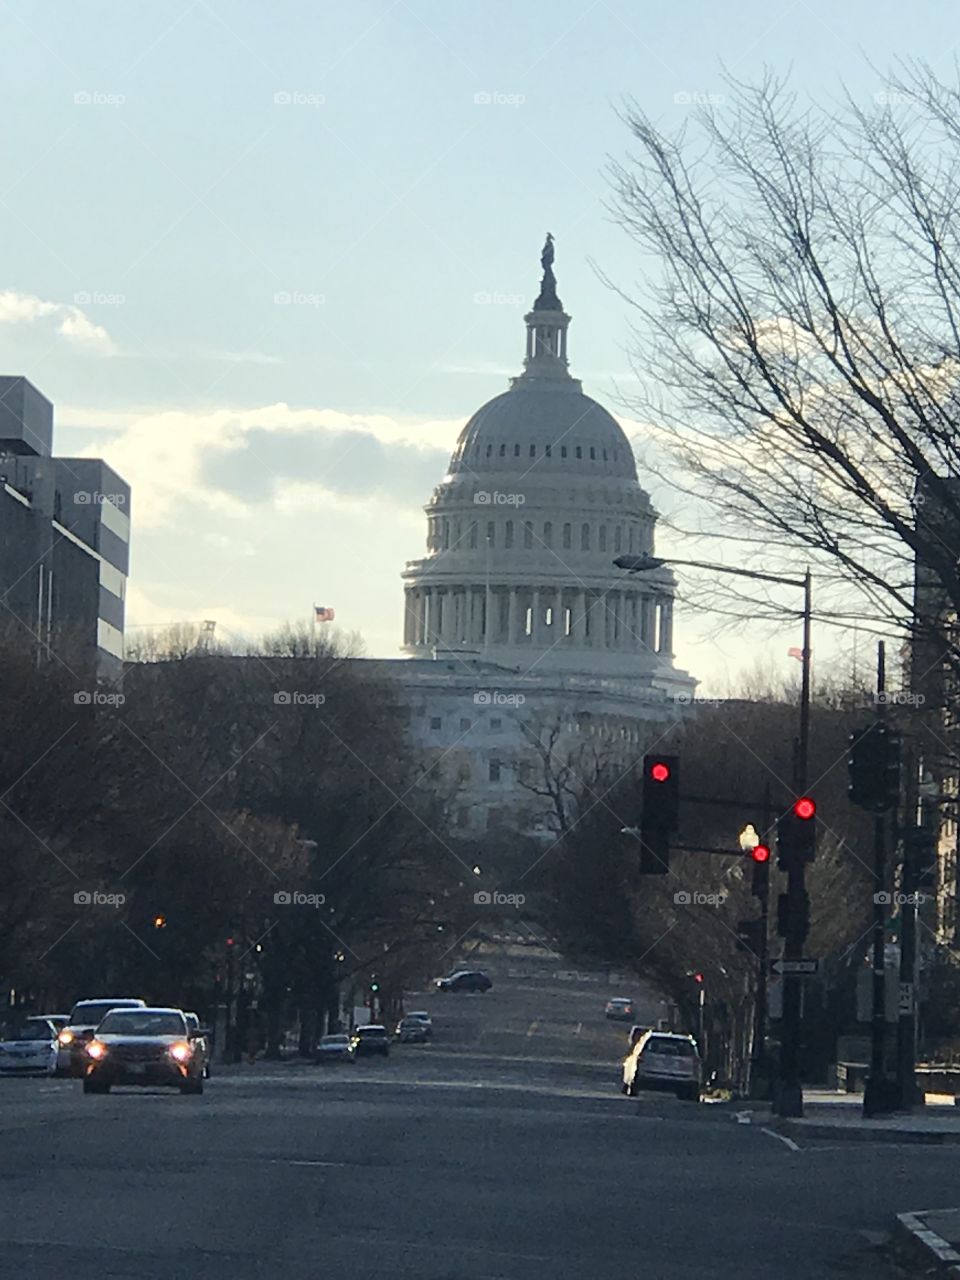 Capitolio Washington DC